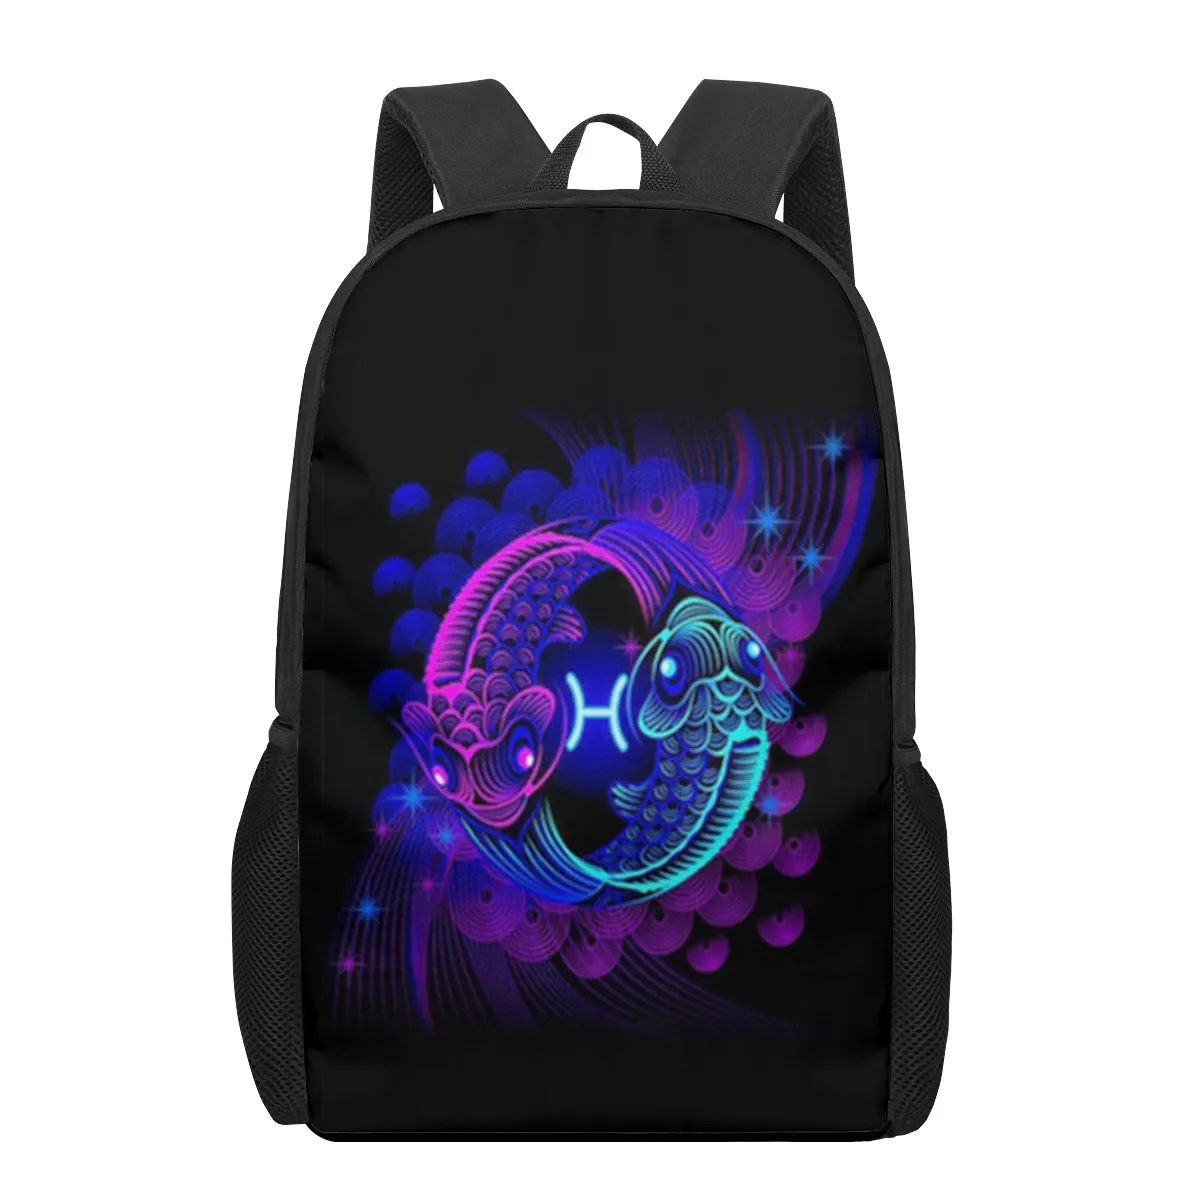 Art 12 constellations  3D Print School Backpack for Boys Girls Teenager Kids Book Bag Casual Shoulder Bags 16Inch Satchel Mochil